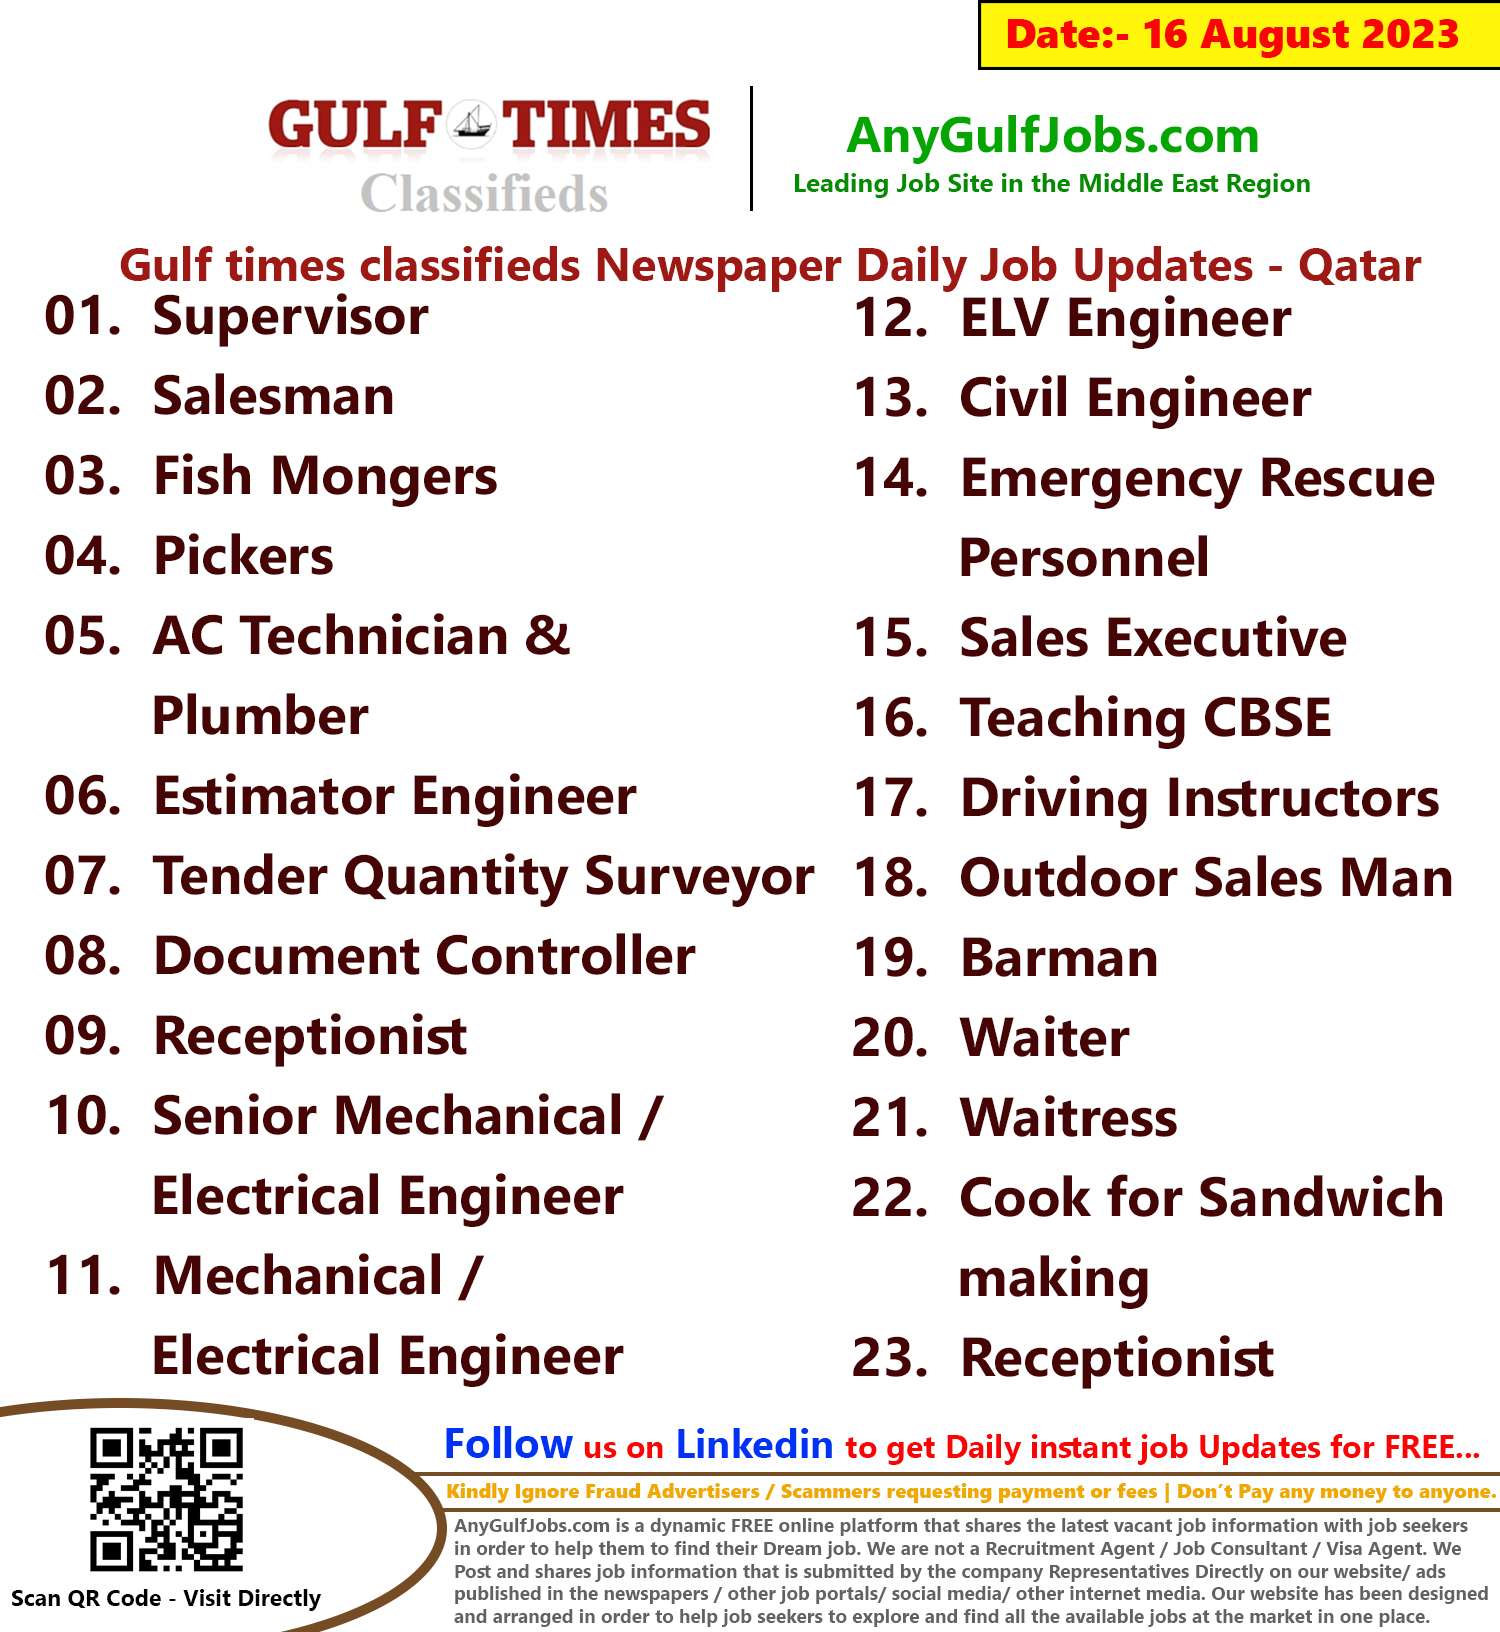 Gulf times classifieds Job Vacancies Qatar - 16 August 2023